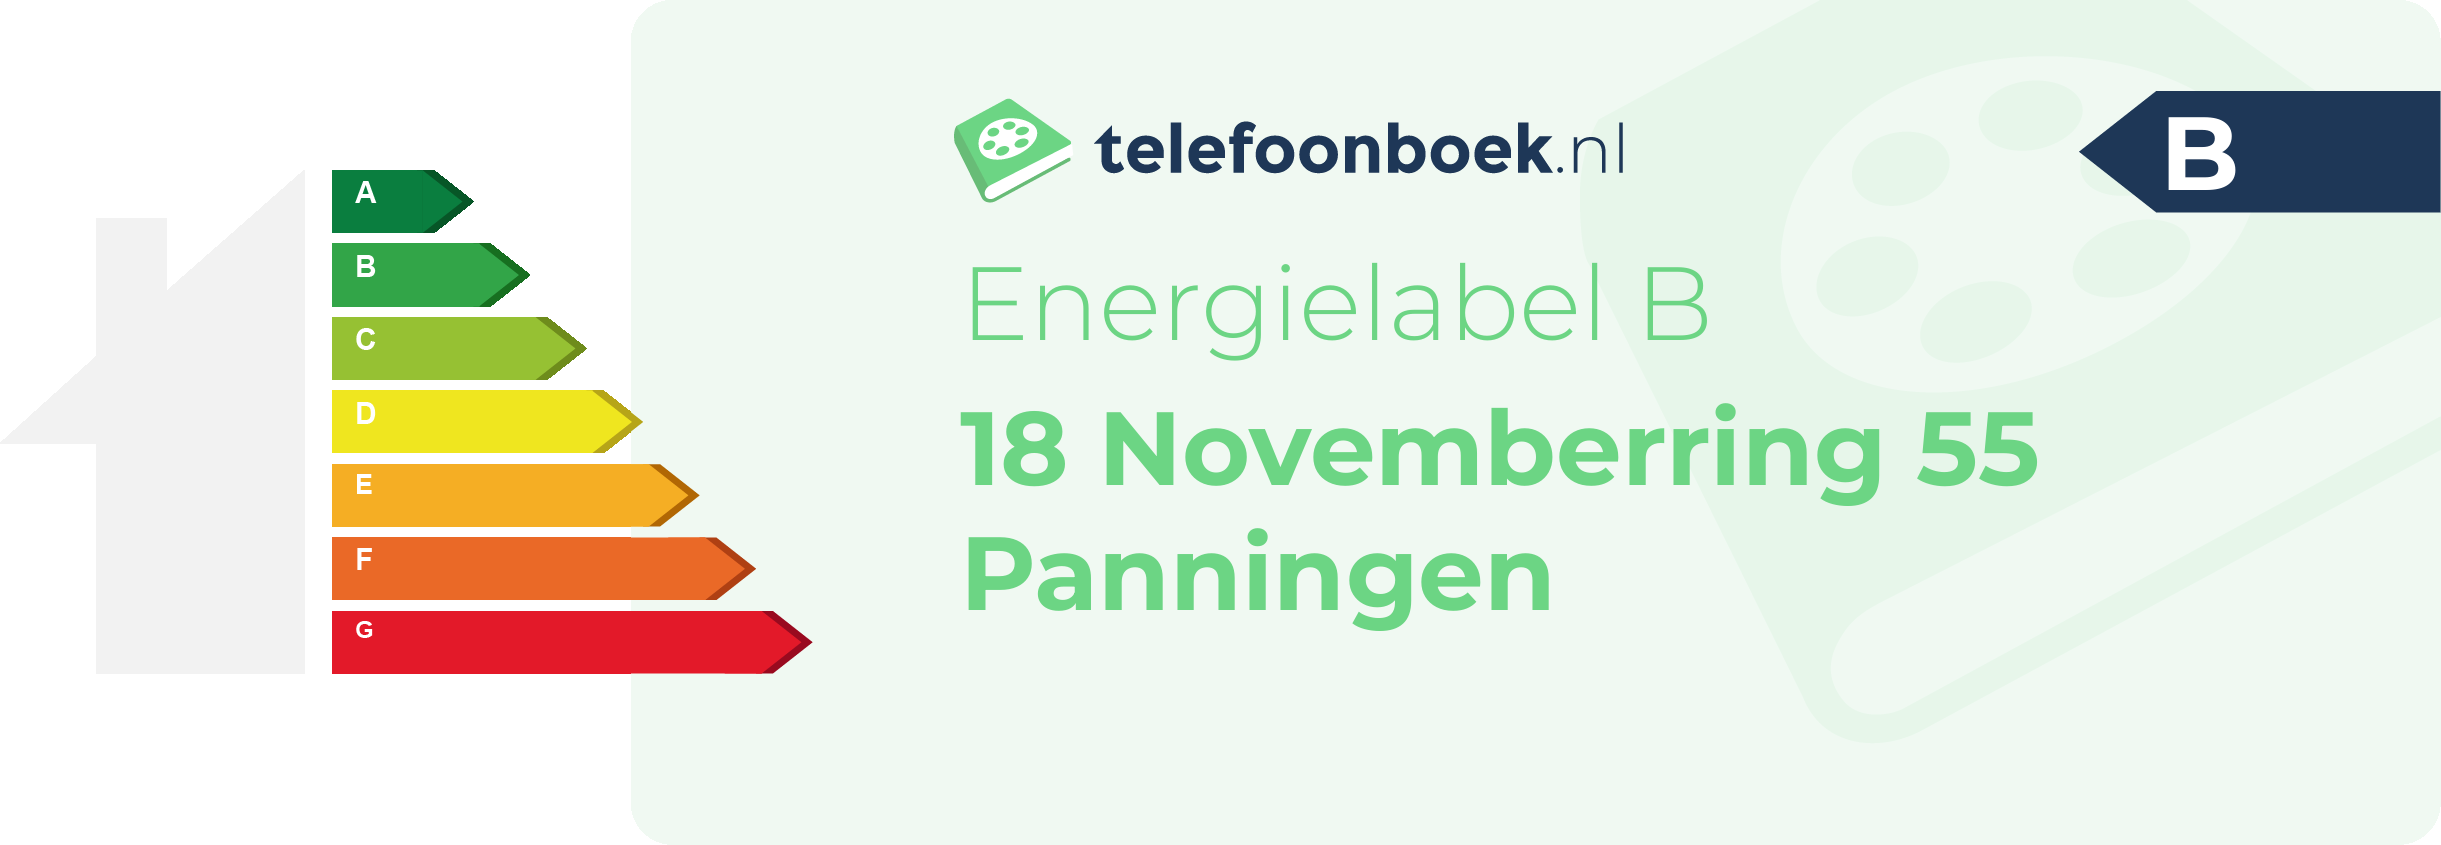 Energielabel 18 Novemberring 55 Panningen